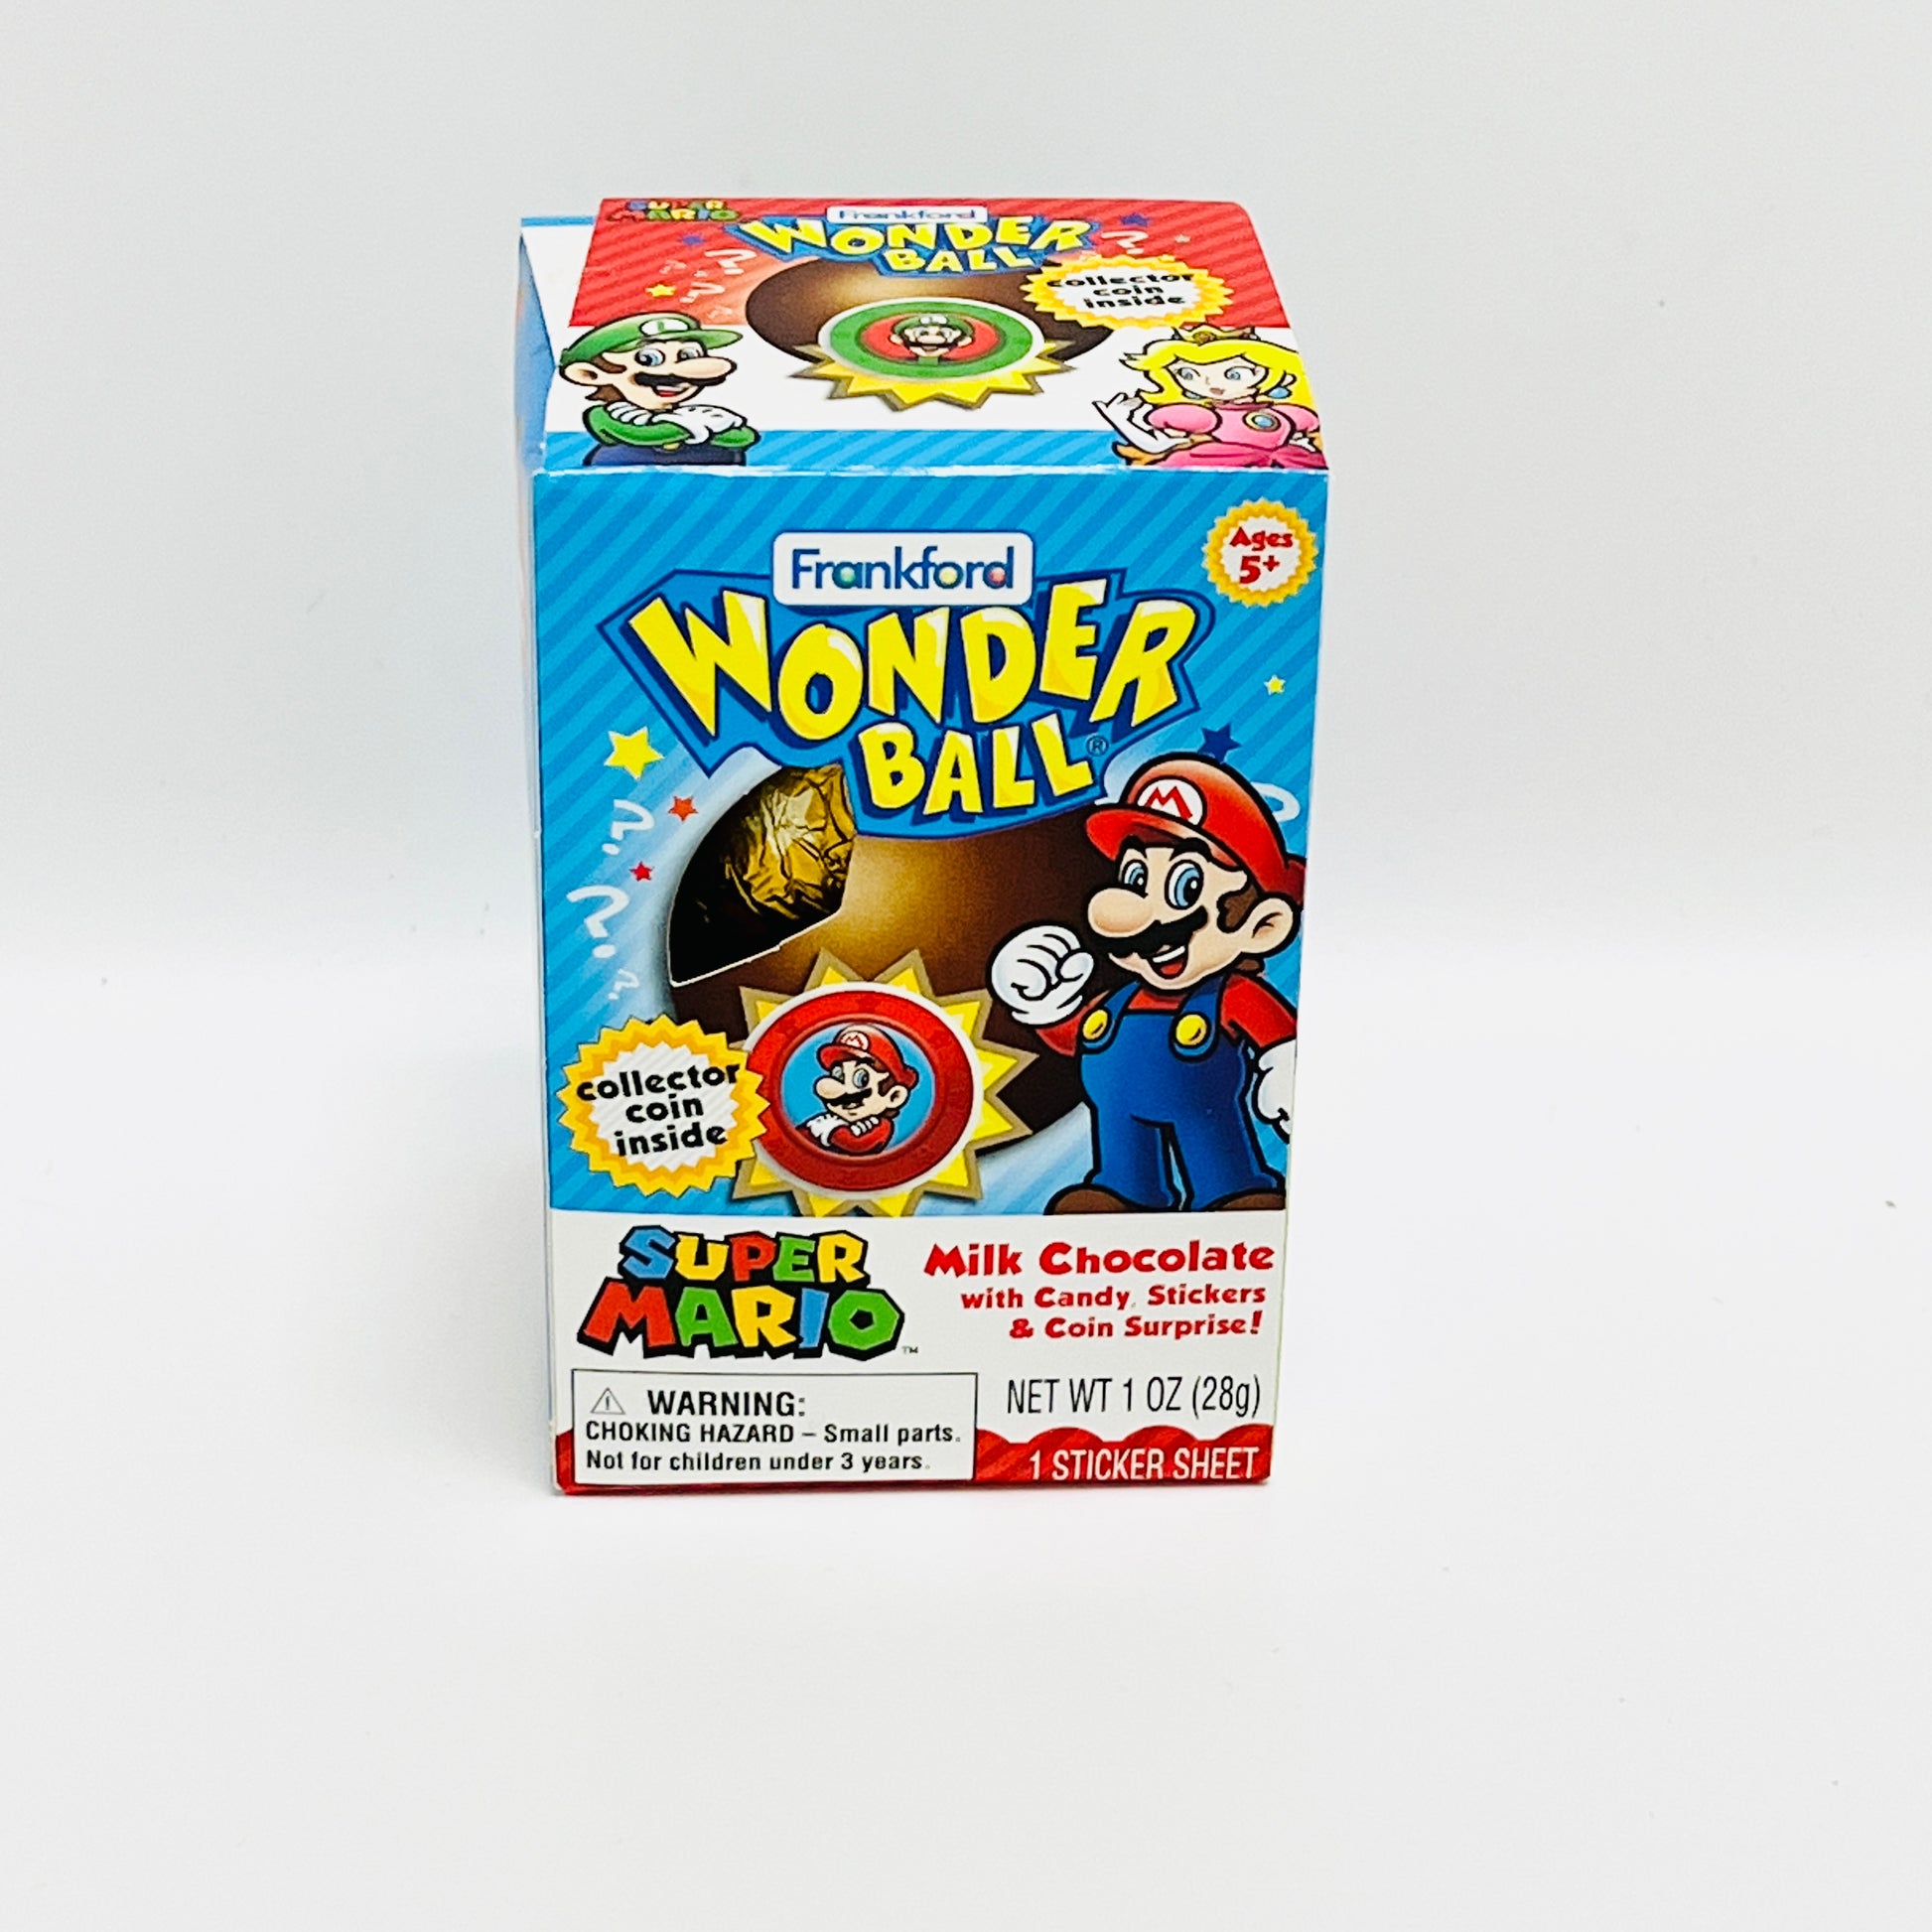 Super Mario Wonder Ball